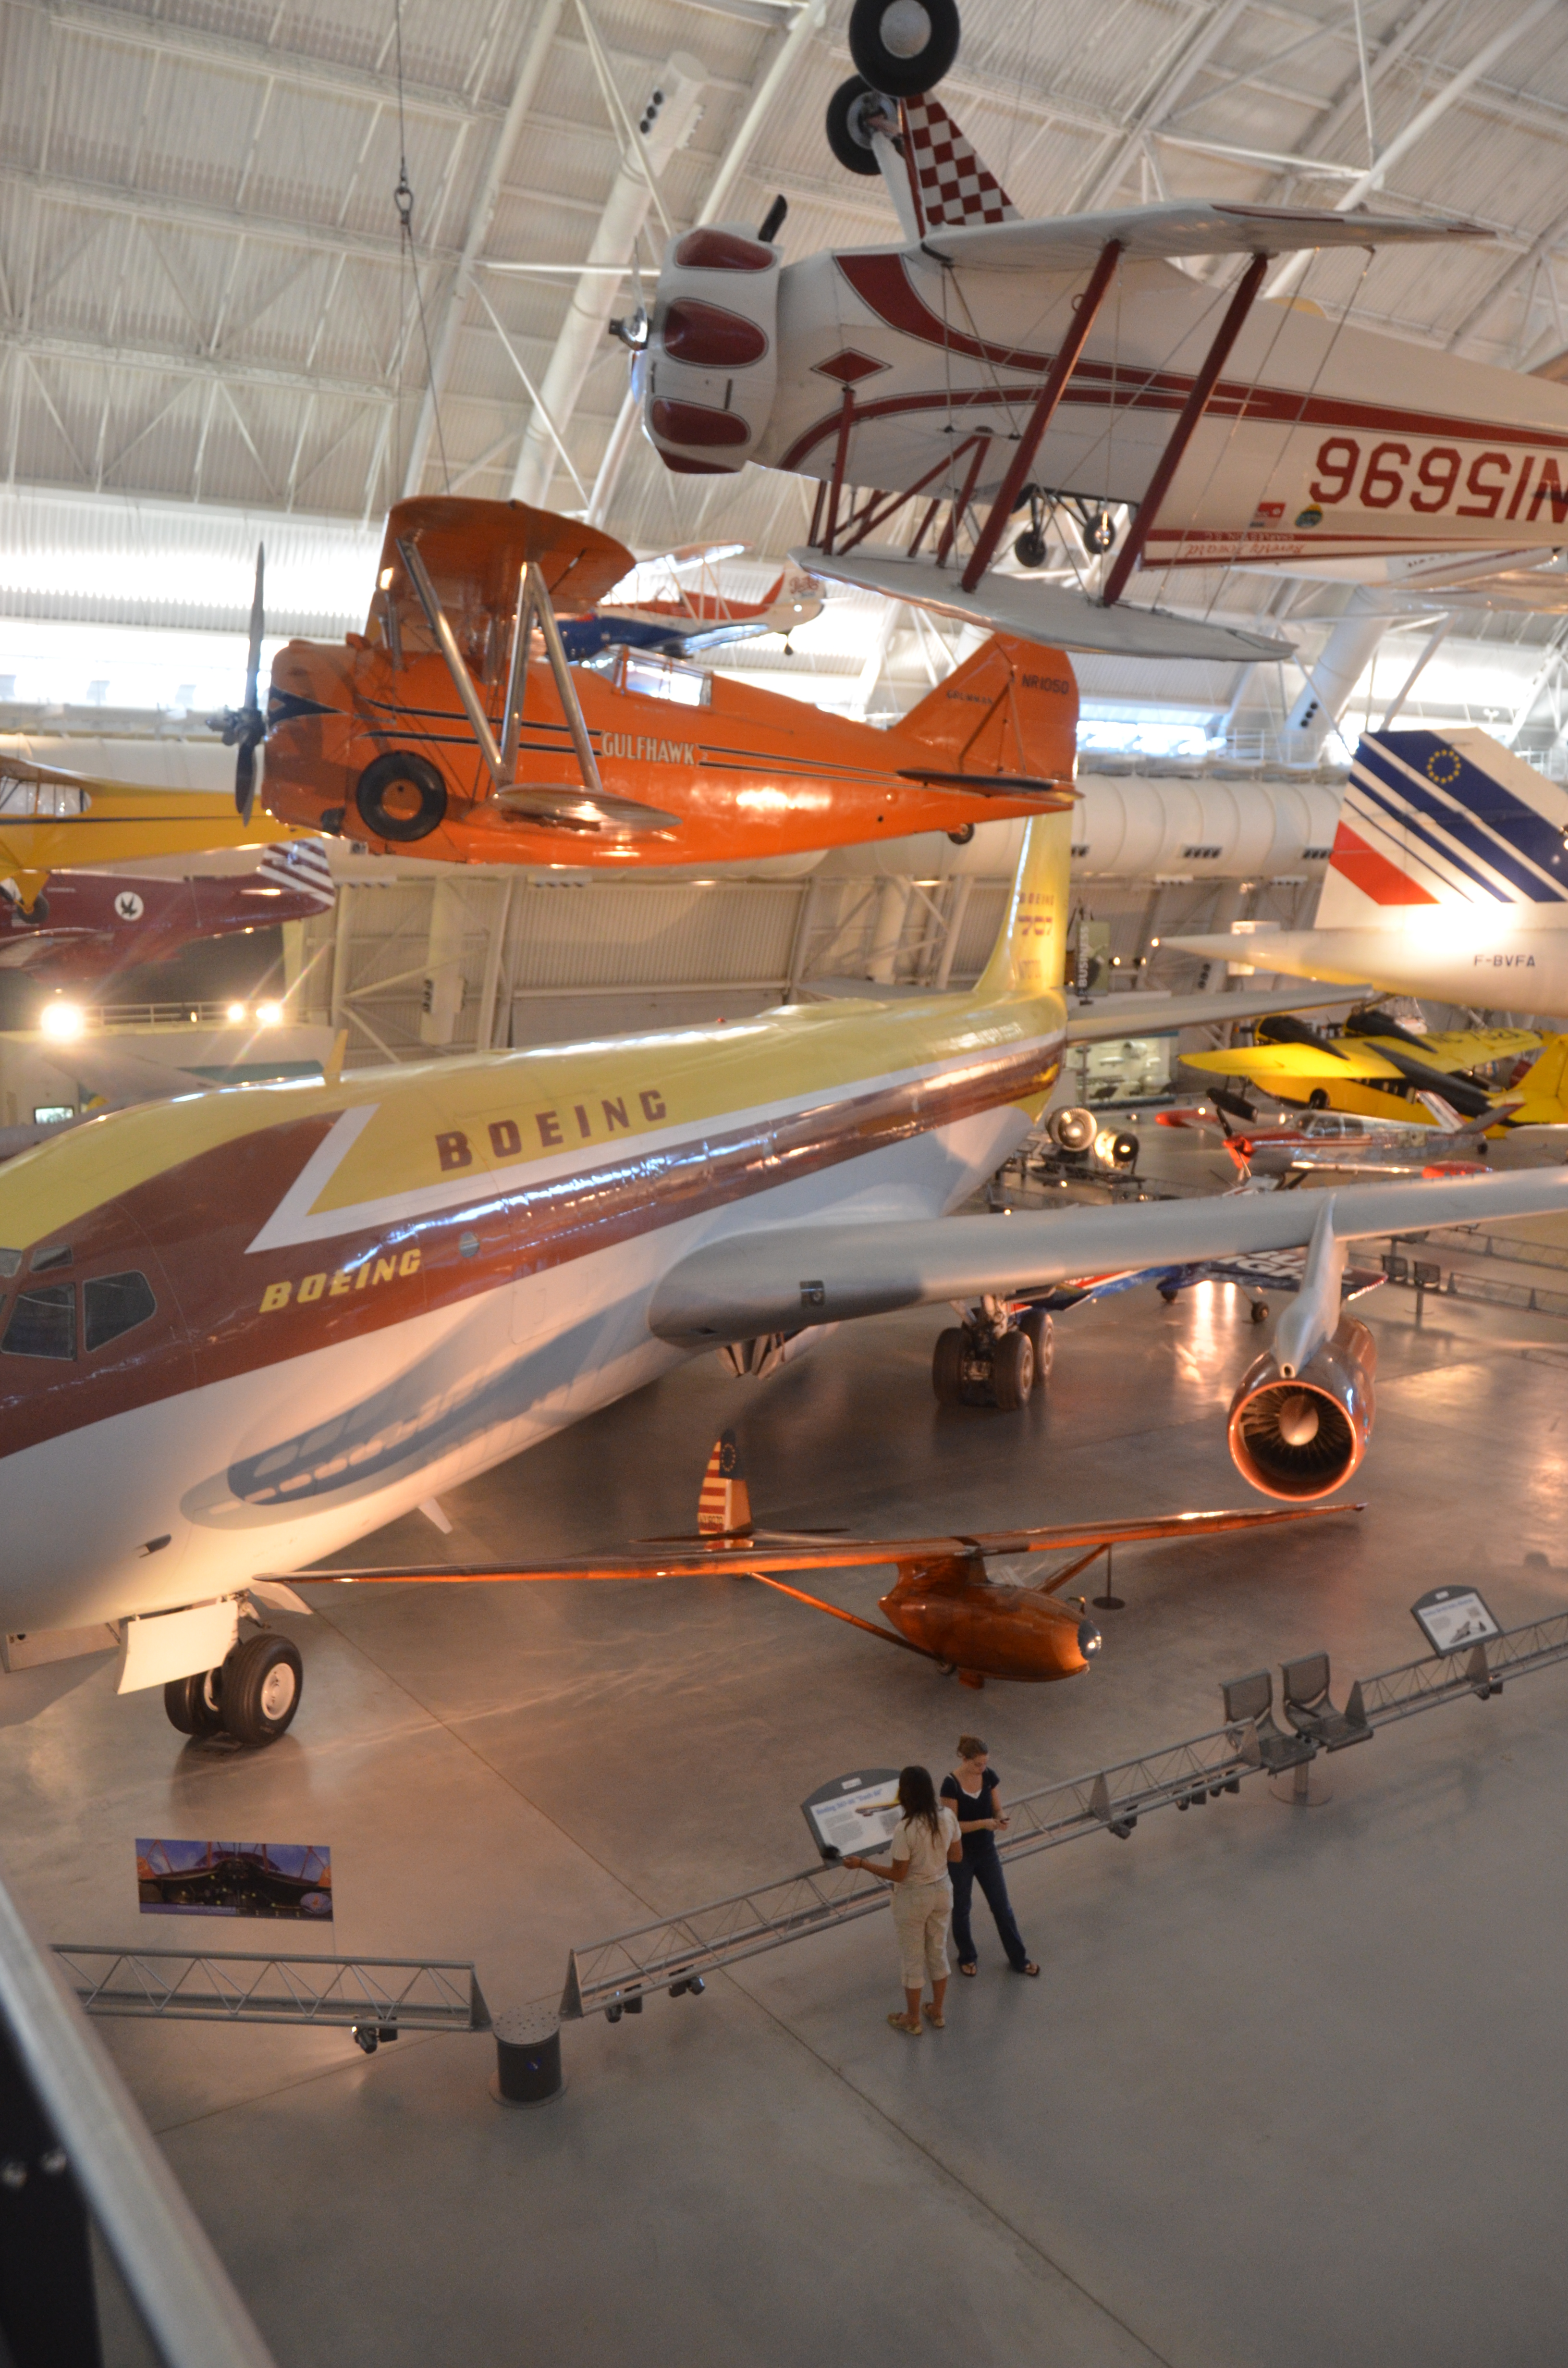 Steven F. Udvar-Hazy Center: south hangar panorama, including Grumman G-22 "Gulfhawk II", Boeing 367-80 (707) Jet Transport, Air France Concorde among others